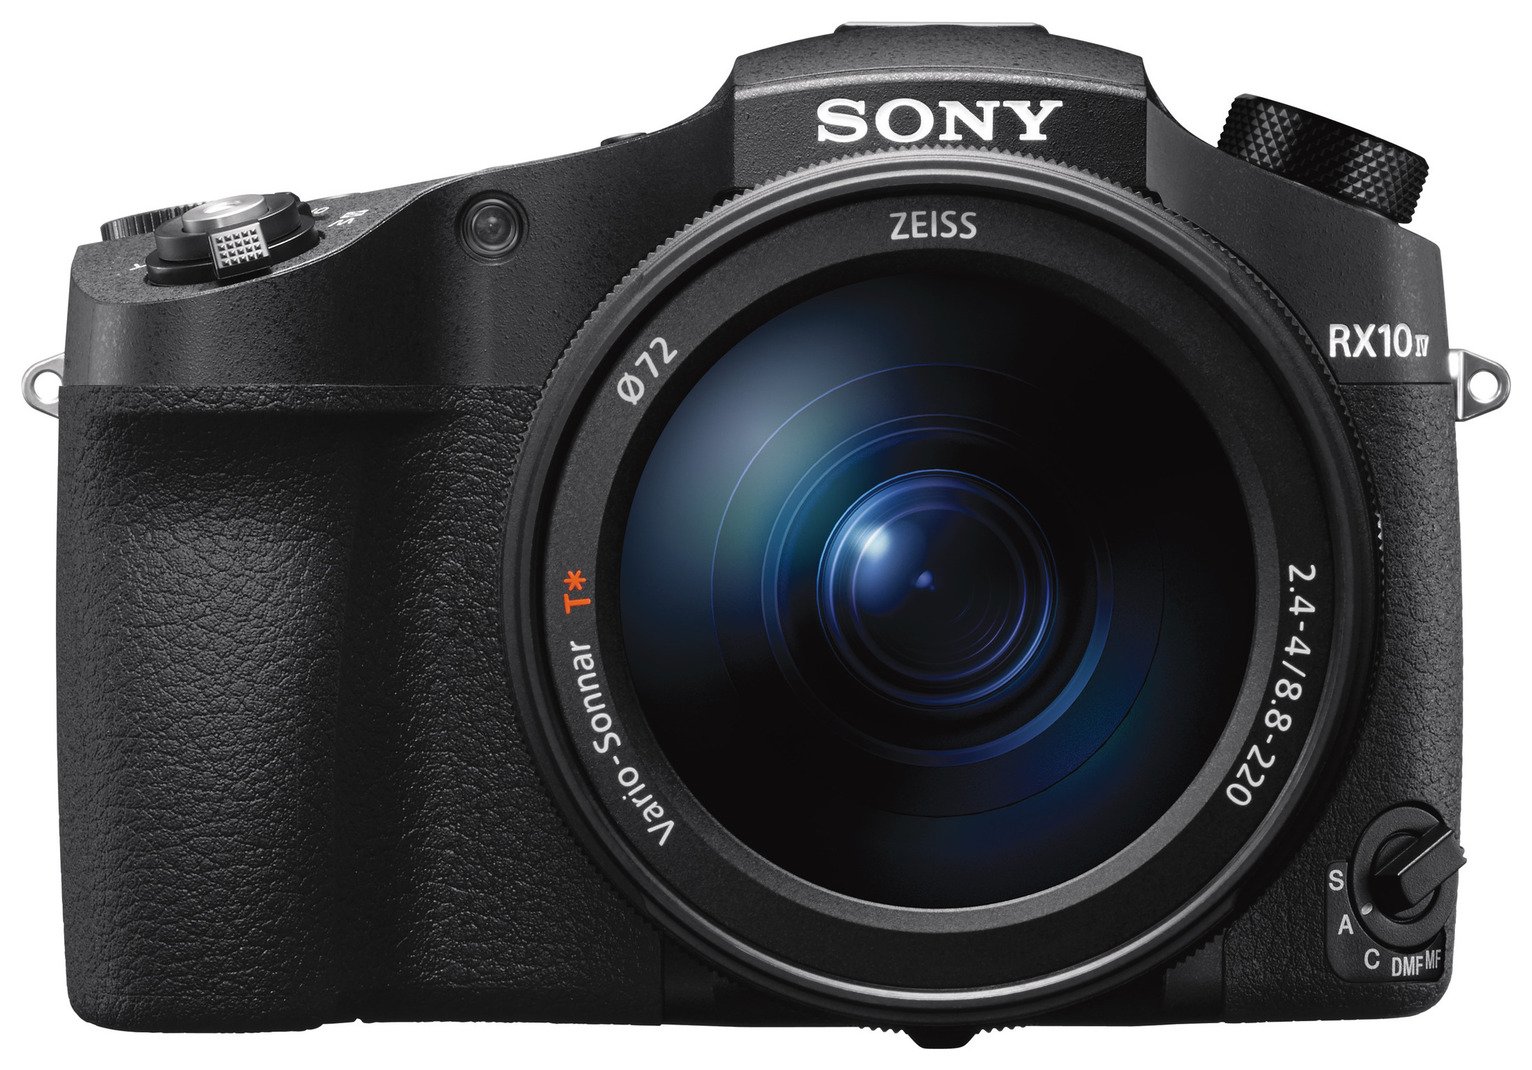 Sony DSC-RX10M4 Premium Bridge Camera Review